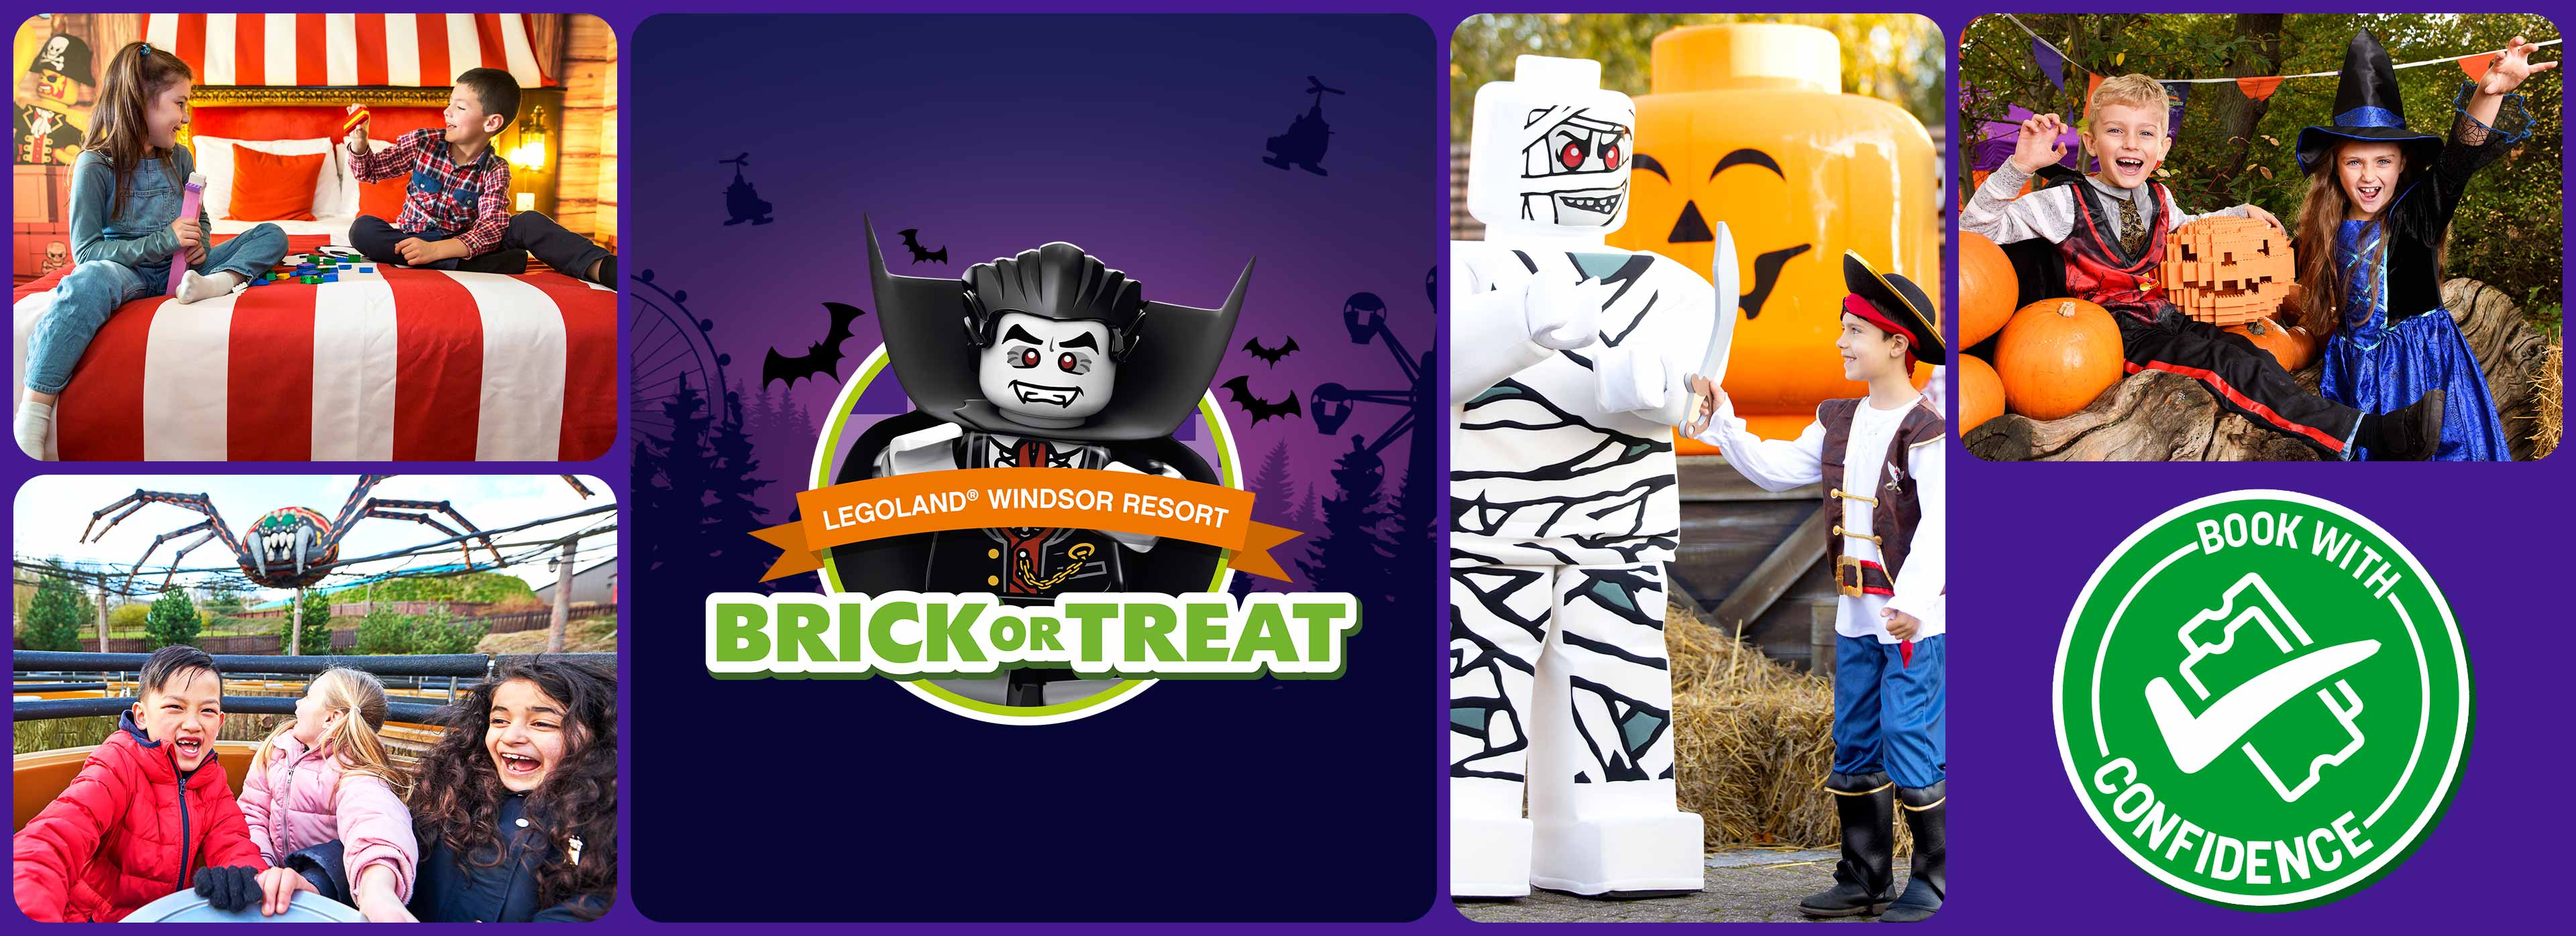 Brick or treat Halloween event at the LEGOLAND Windsor Resort